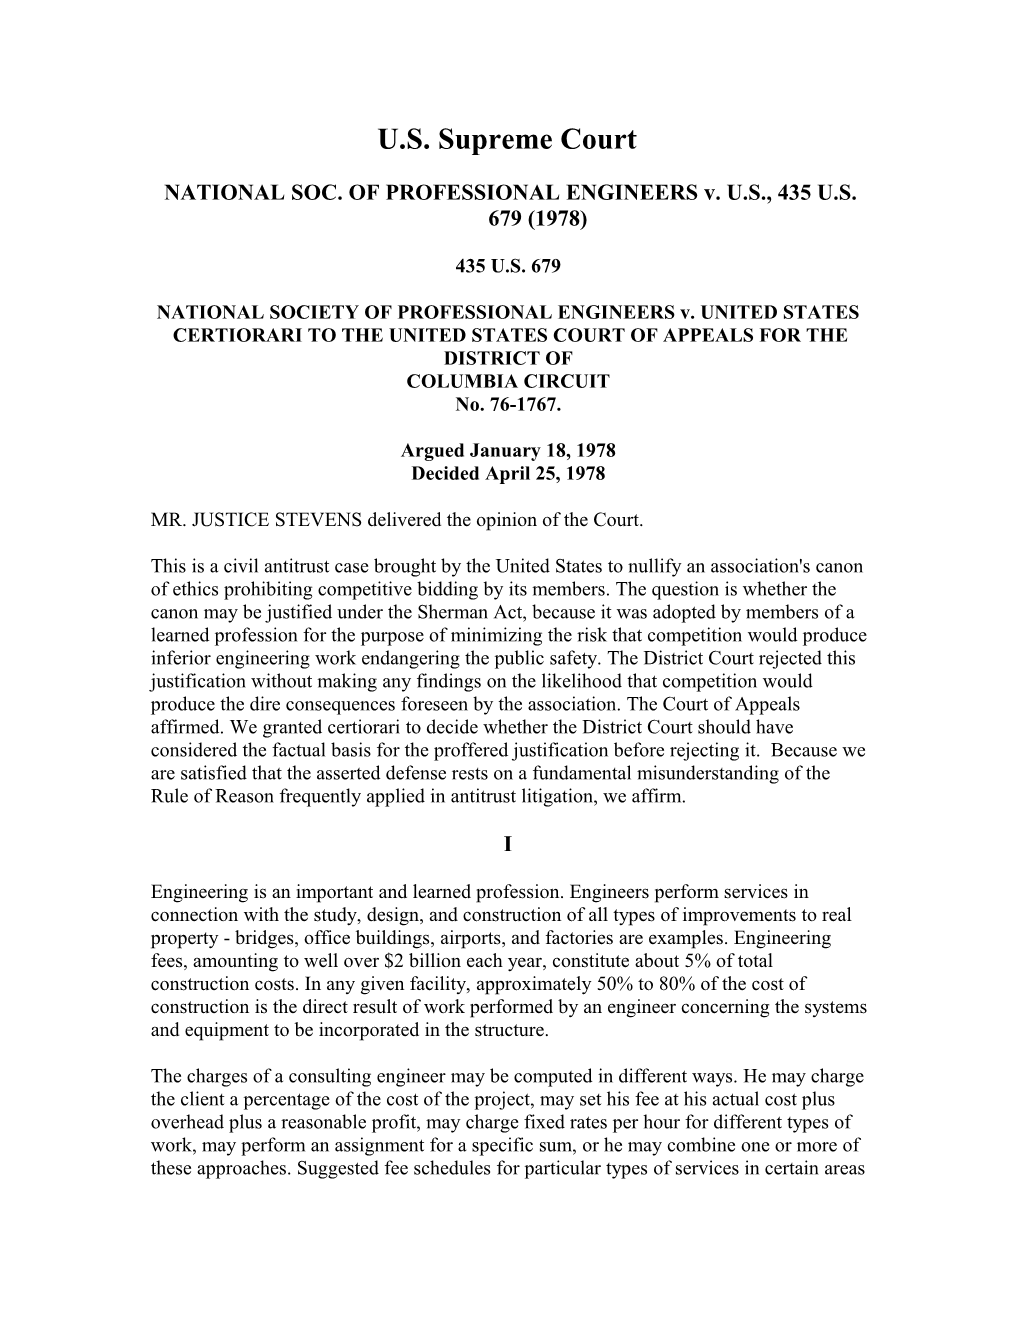 NATIONAL SOC. of PROFESSIONAL ENGINEERS V. U.S., 435 U.S. 679 (1978)